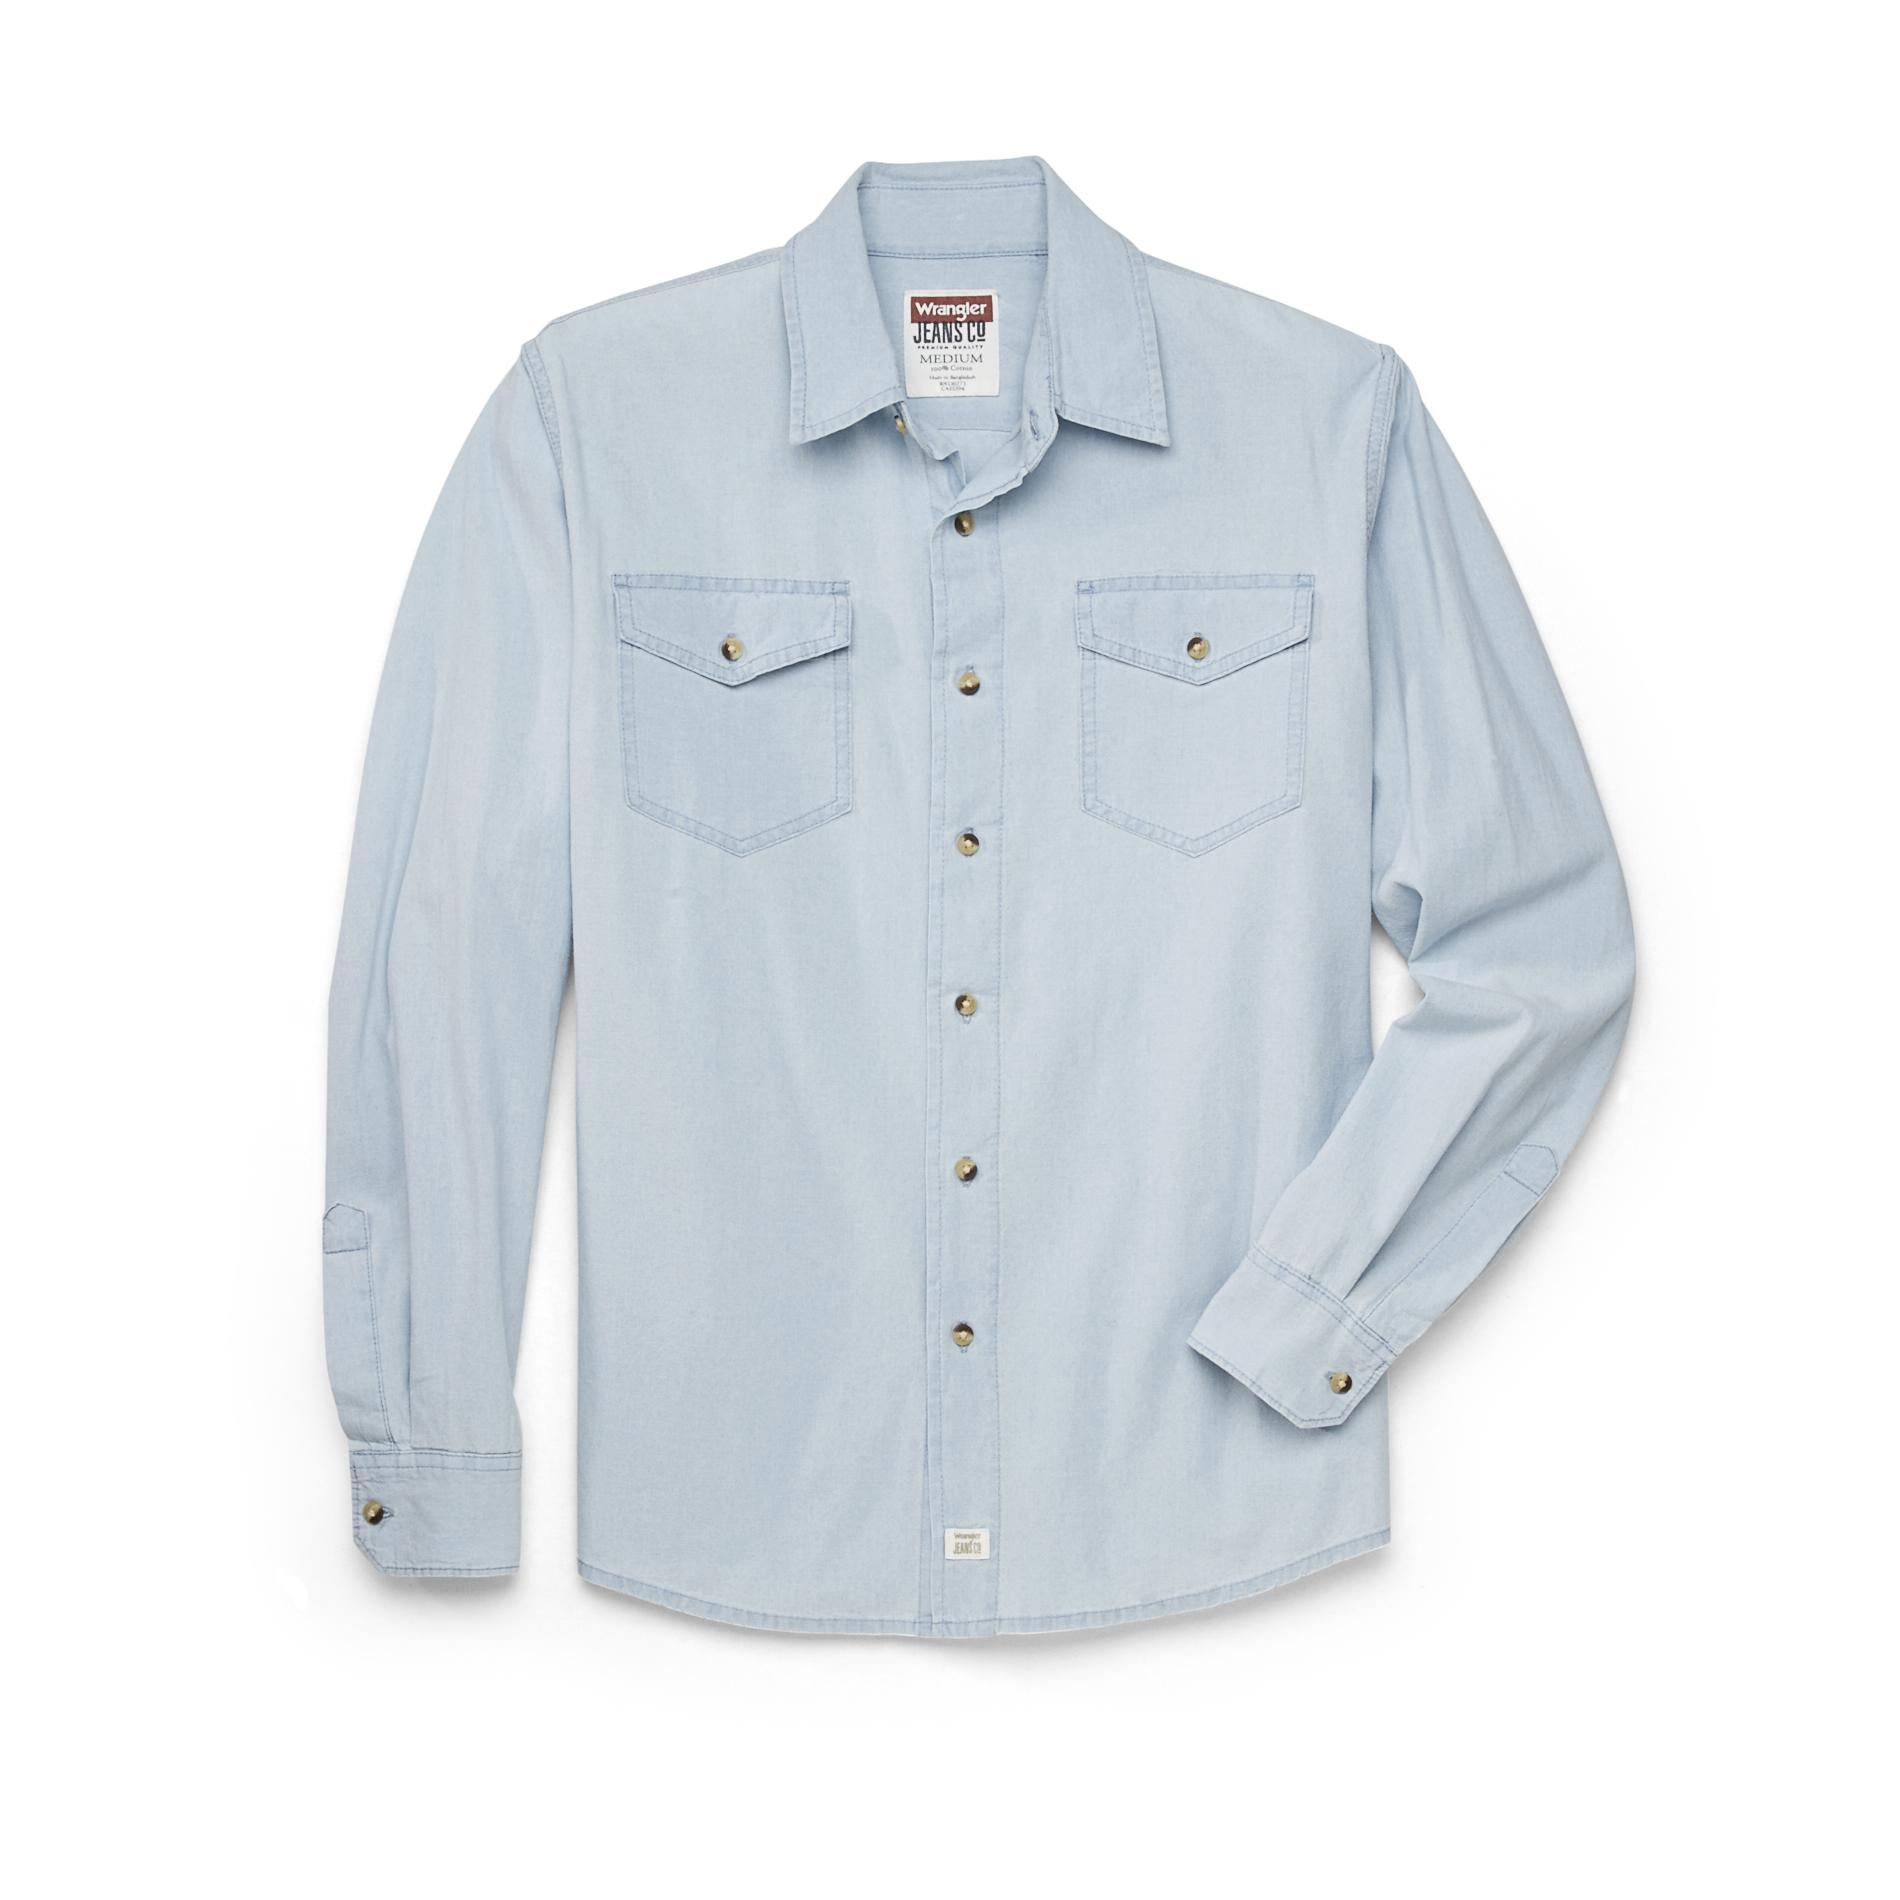 Wrangler Men's Button-Front Shirt - Chambray